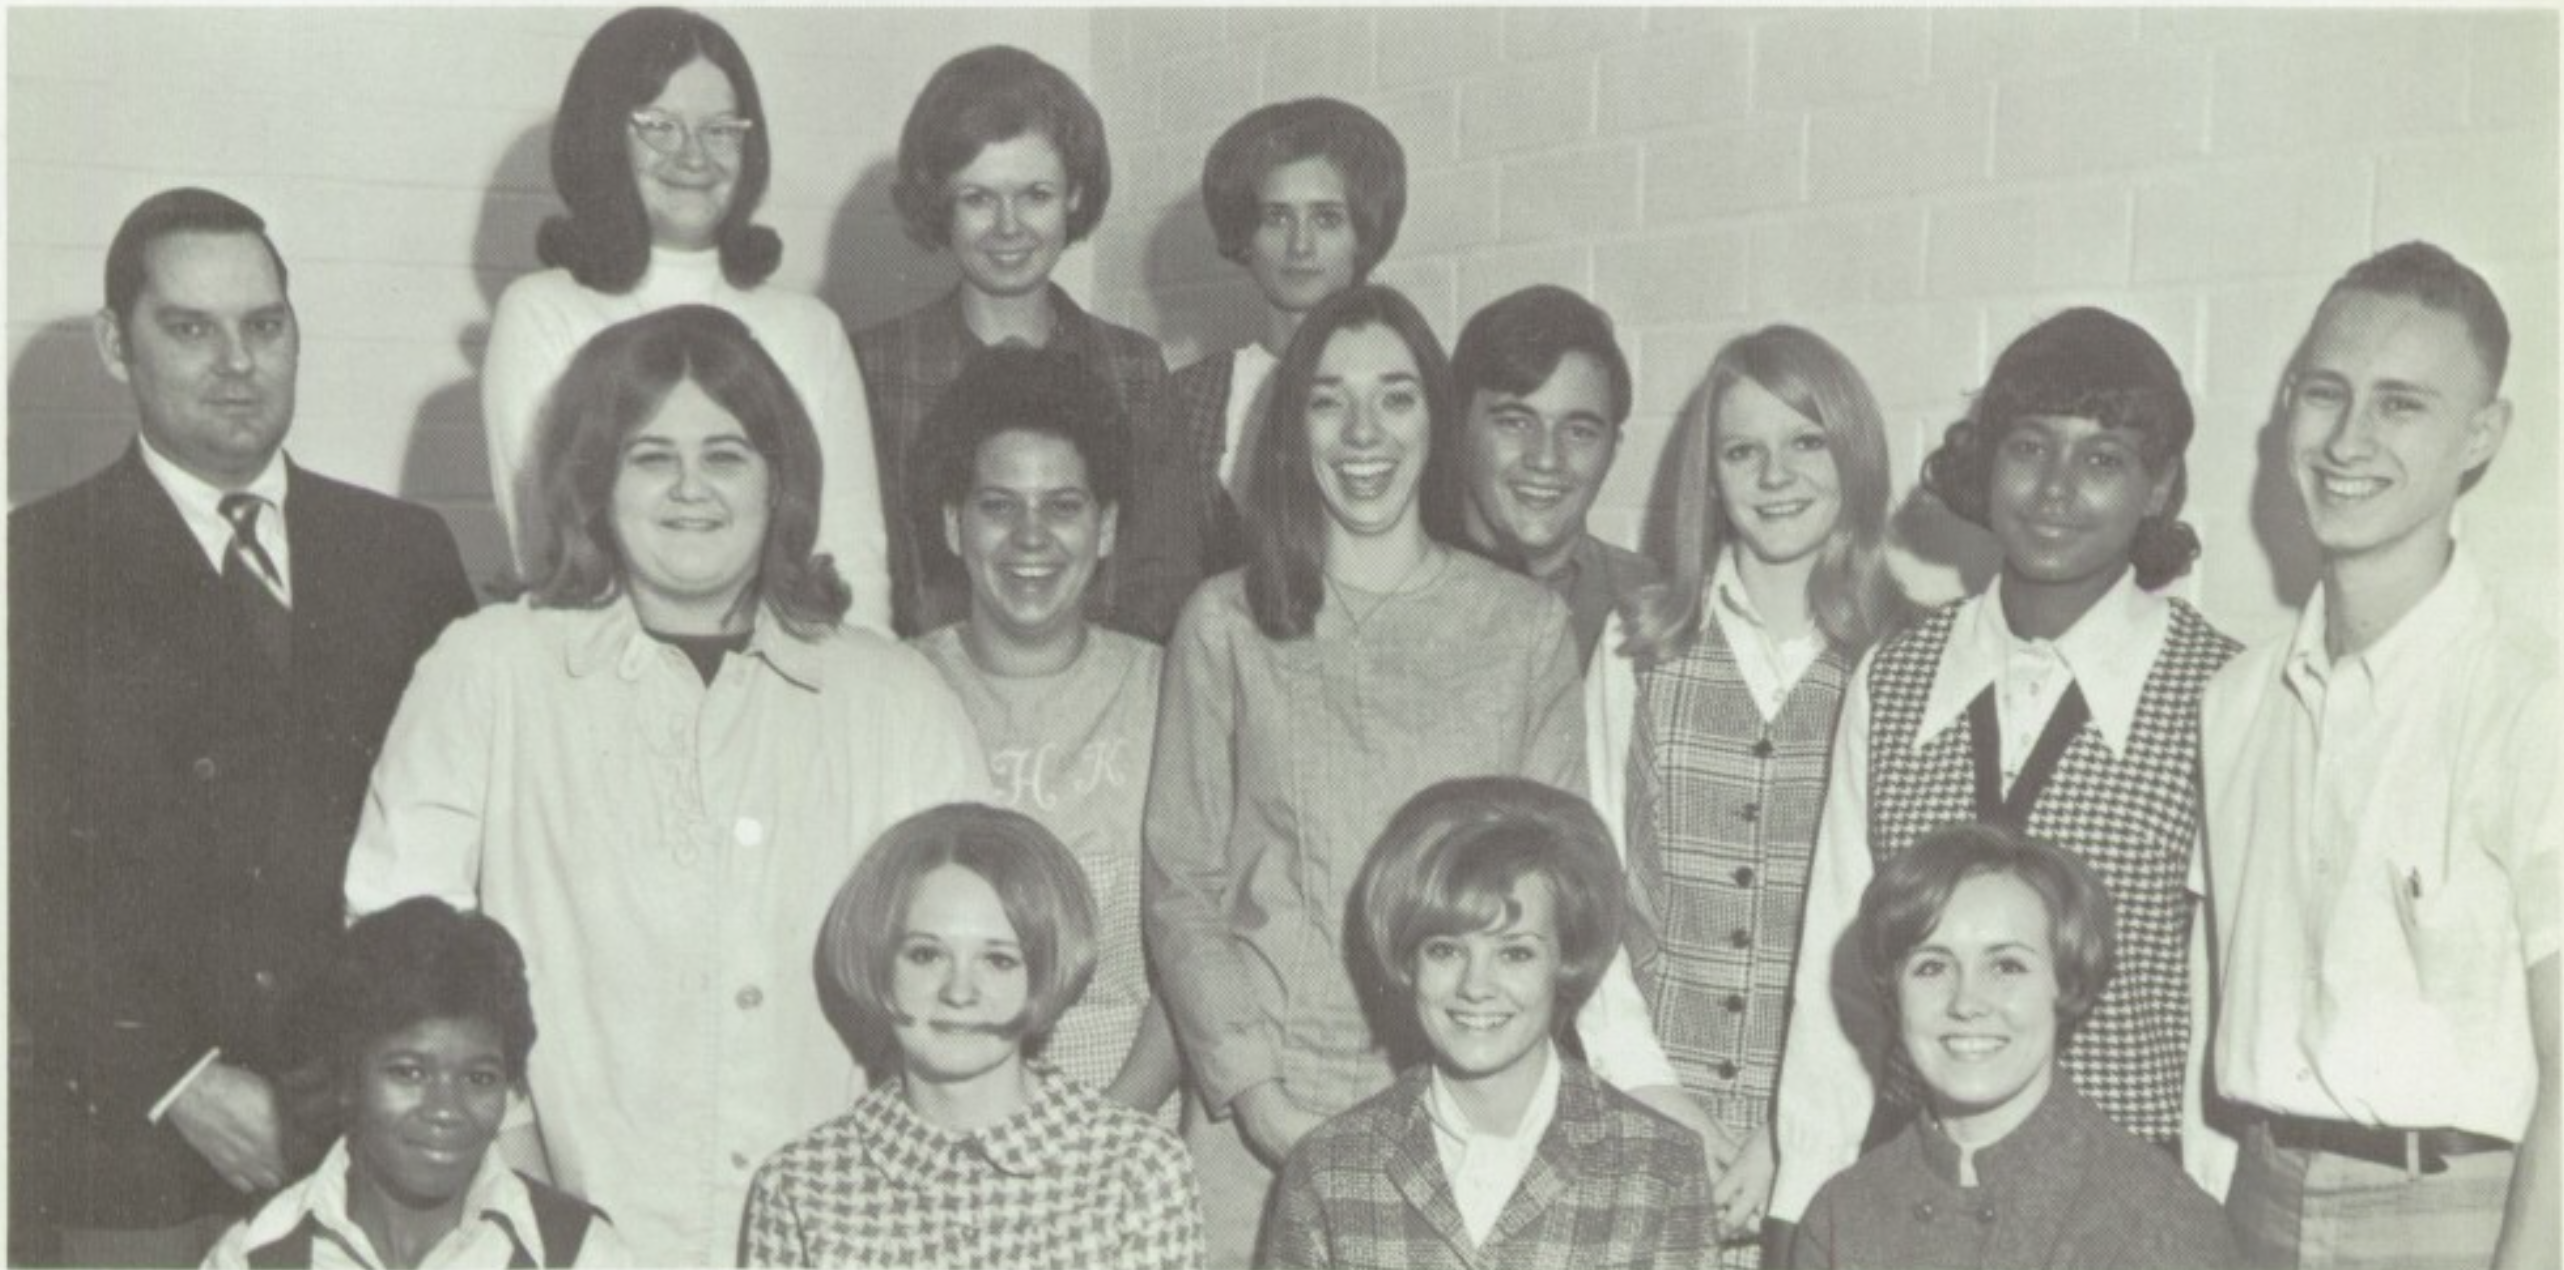 A yearbook photo of Linda Glanton Early among her high school classmates